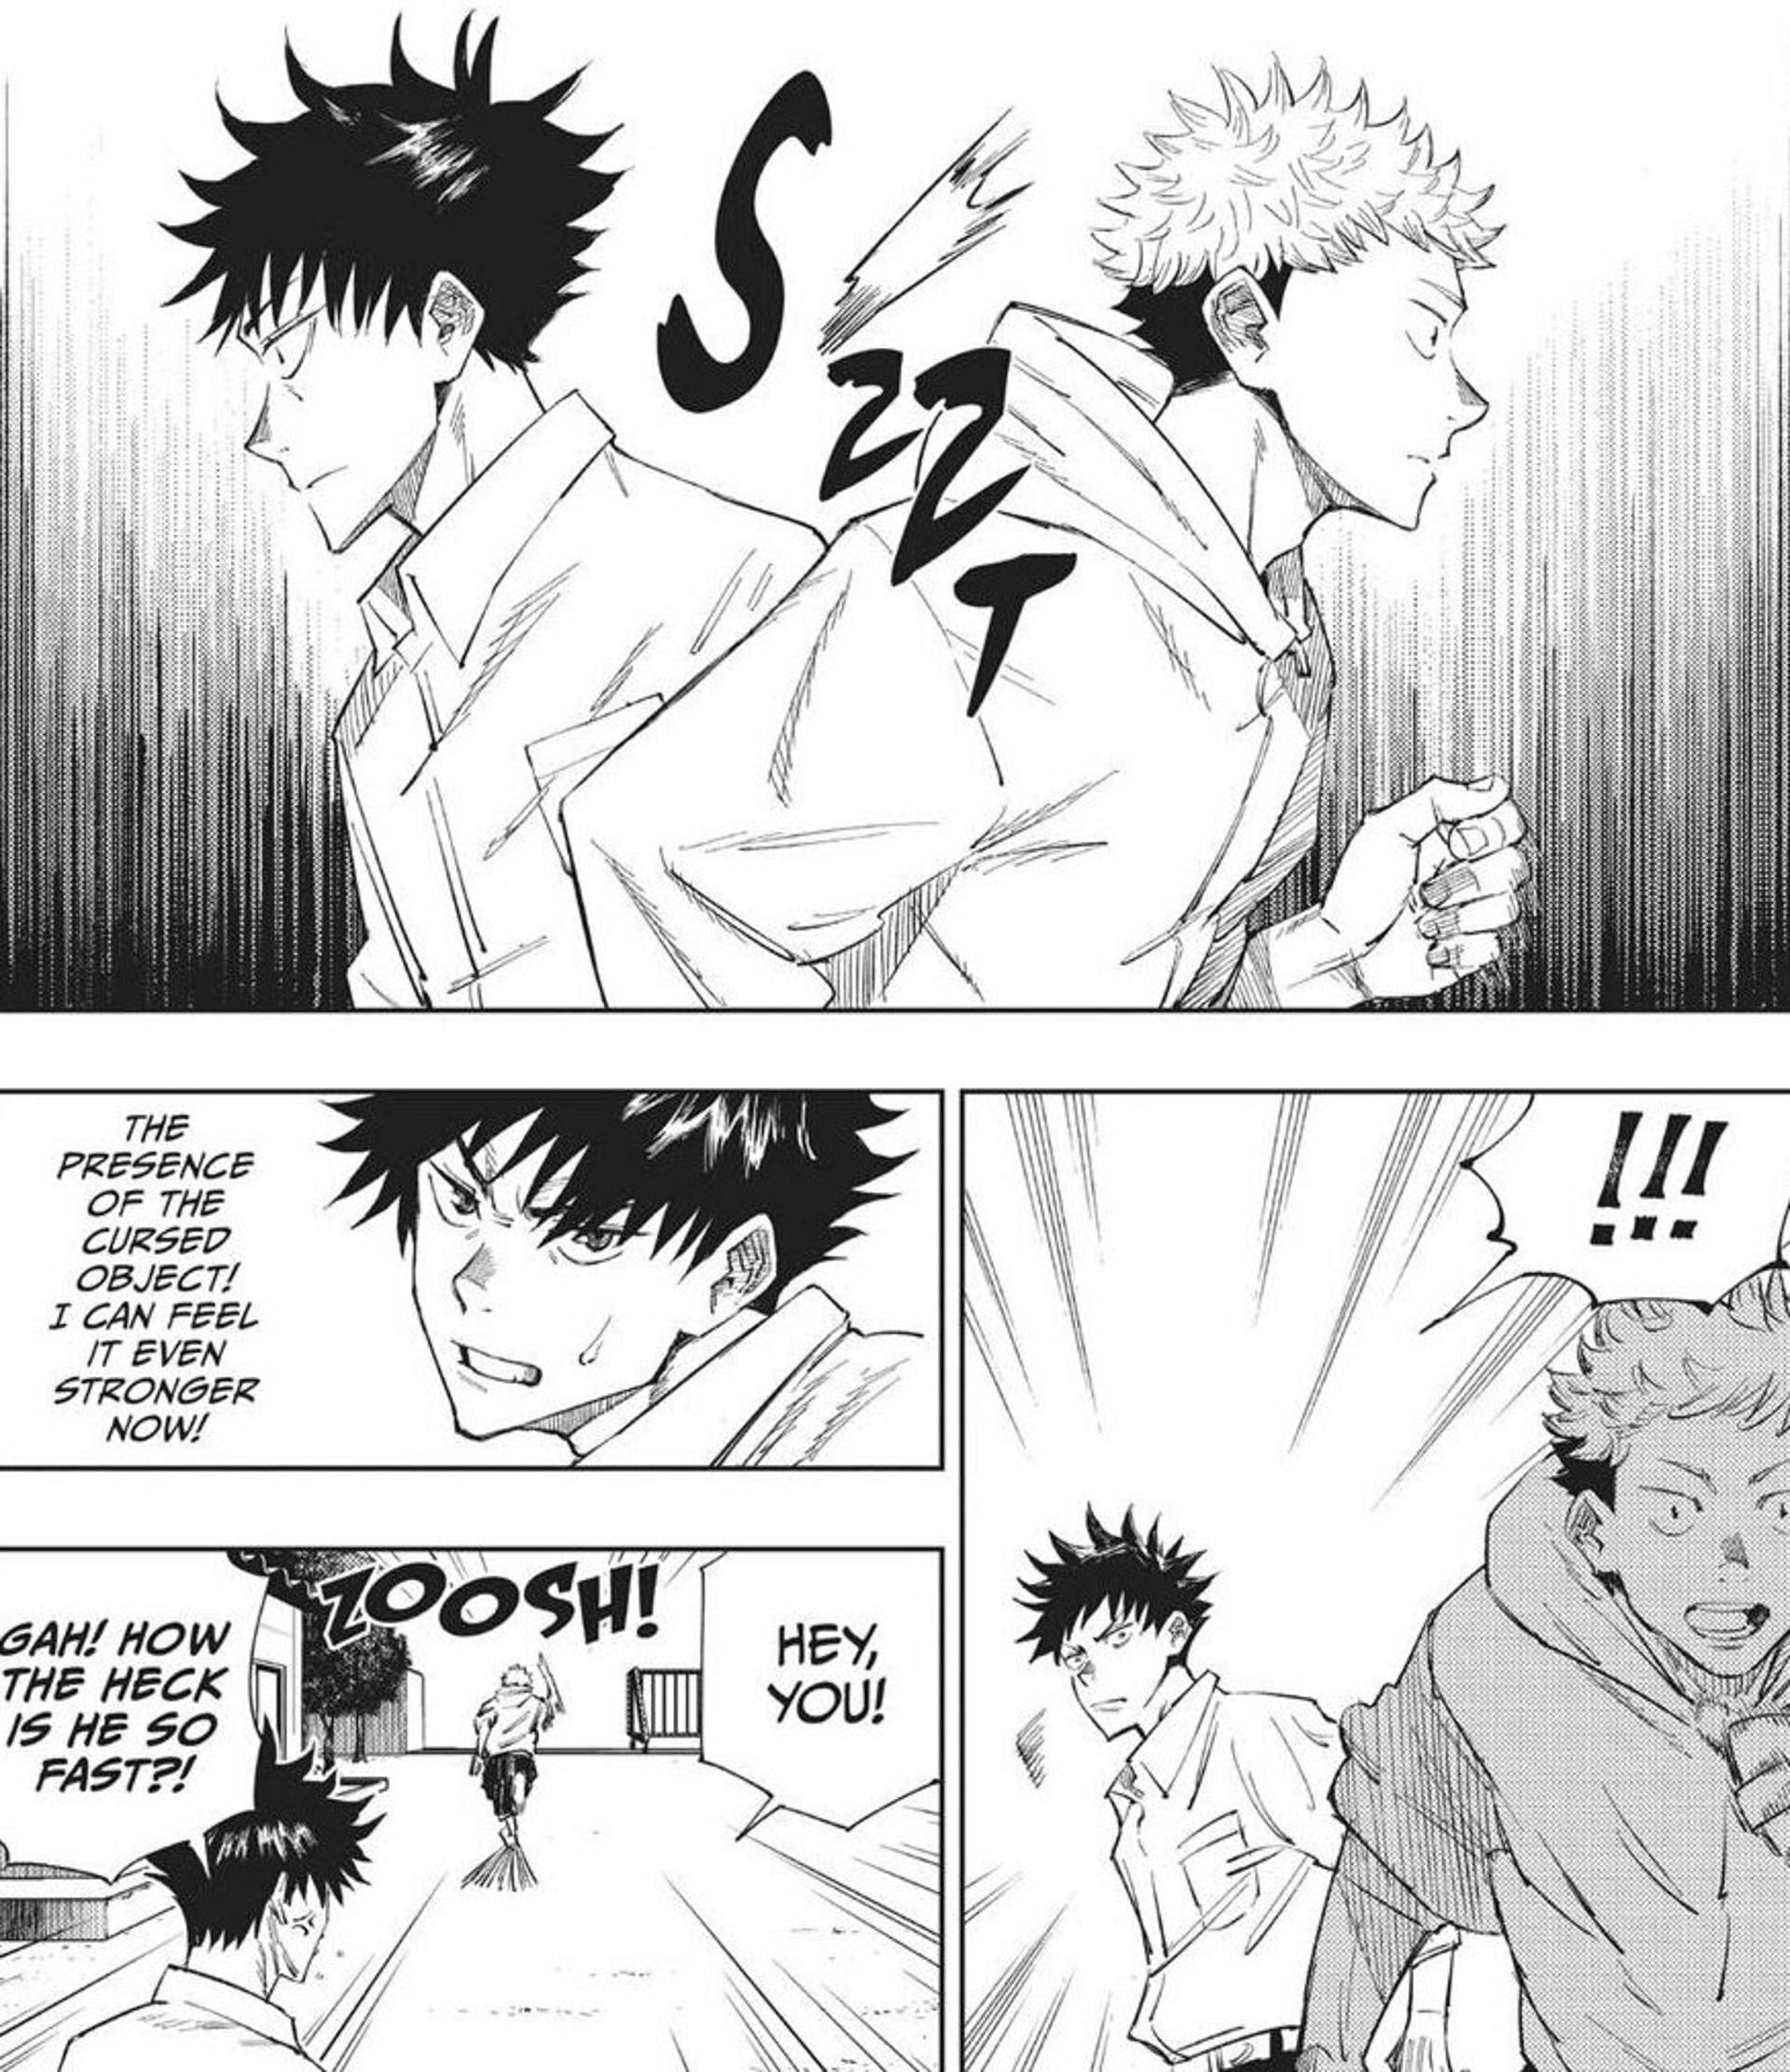 Megumi notices Yuji for the first time in Jujutsu Kaisen (Image via Gege Akutami, Shueisha)